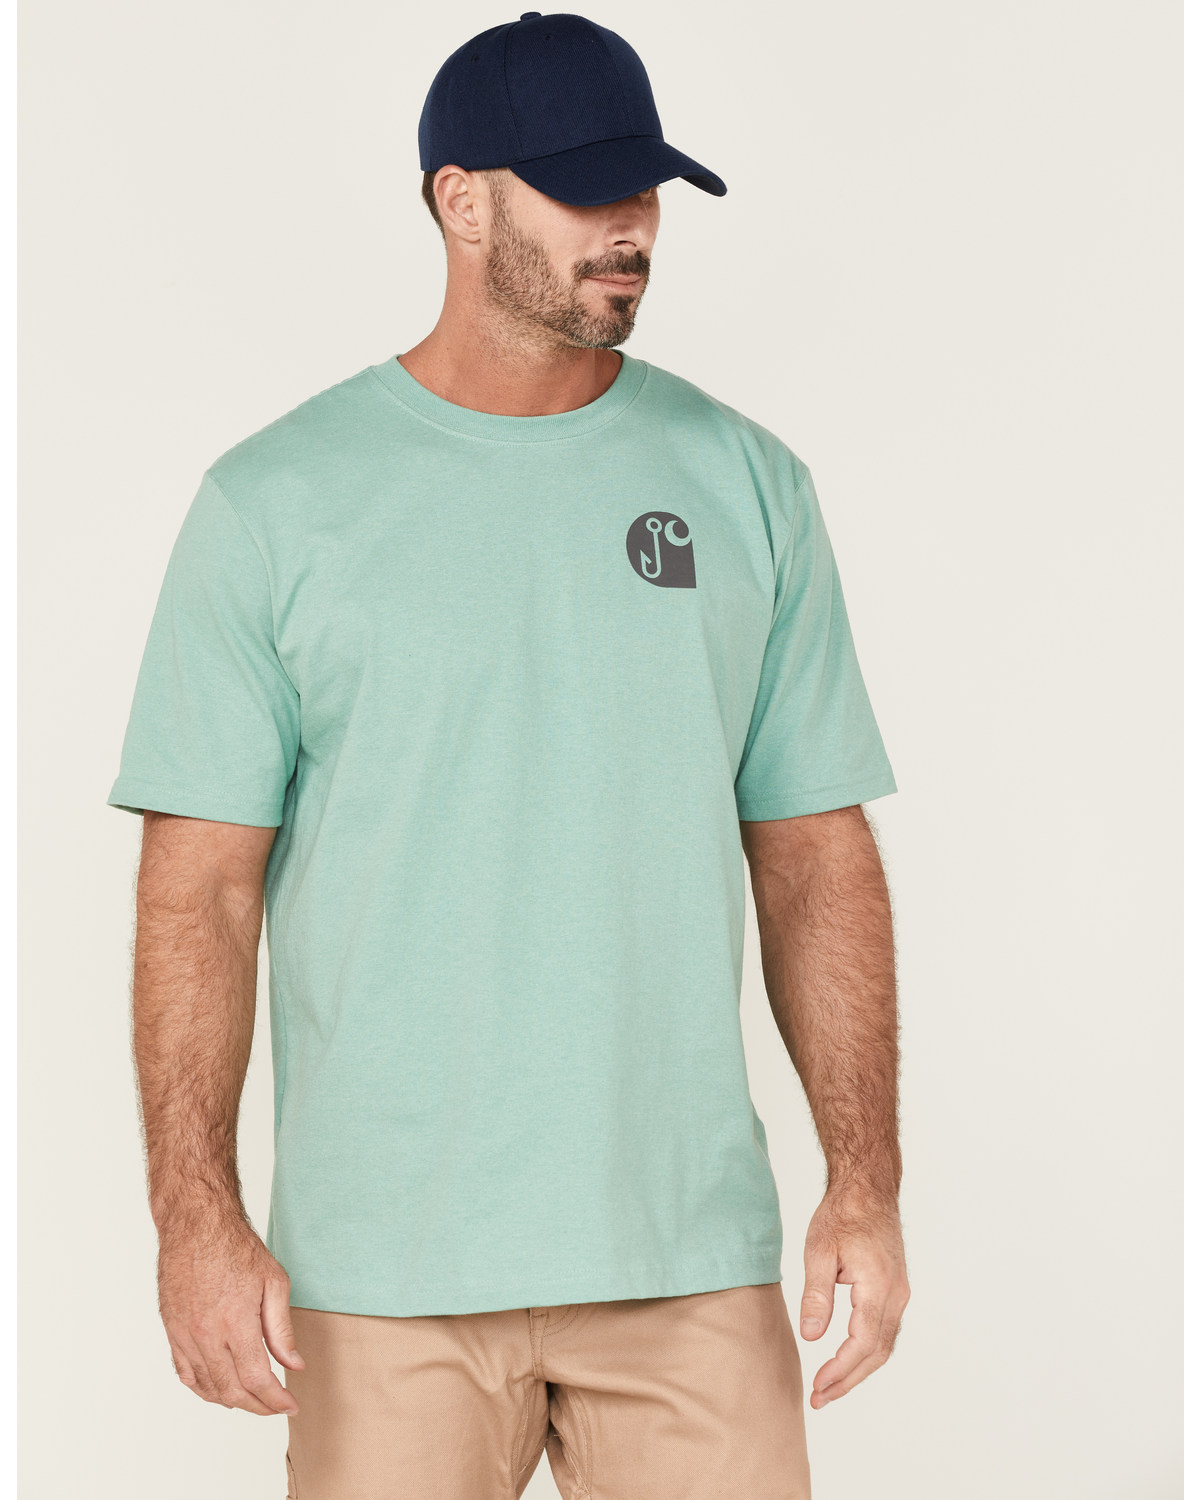 Carhartt Men's Heavyweight Fishing Logo Graphic T-Shirt - Regular & Big